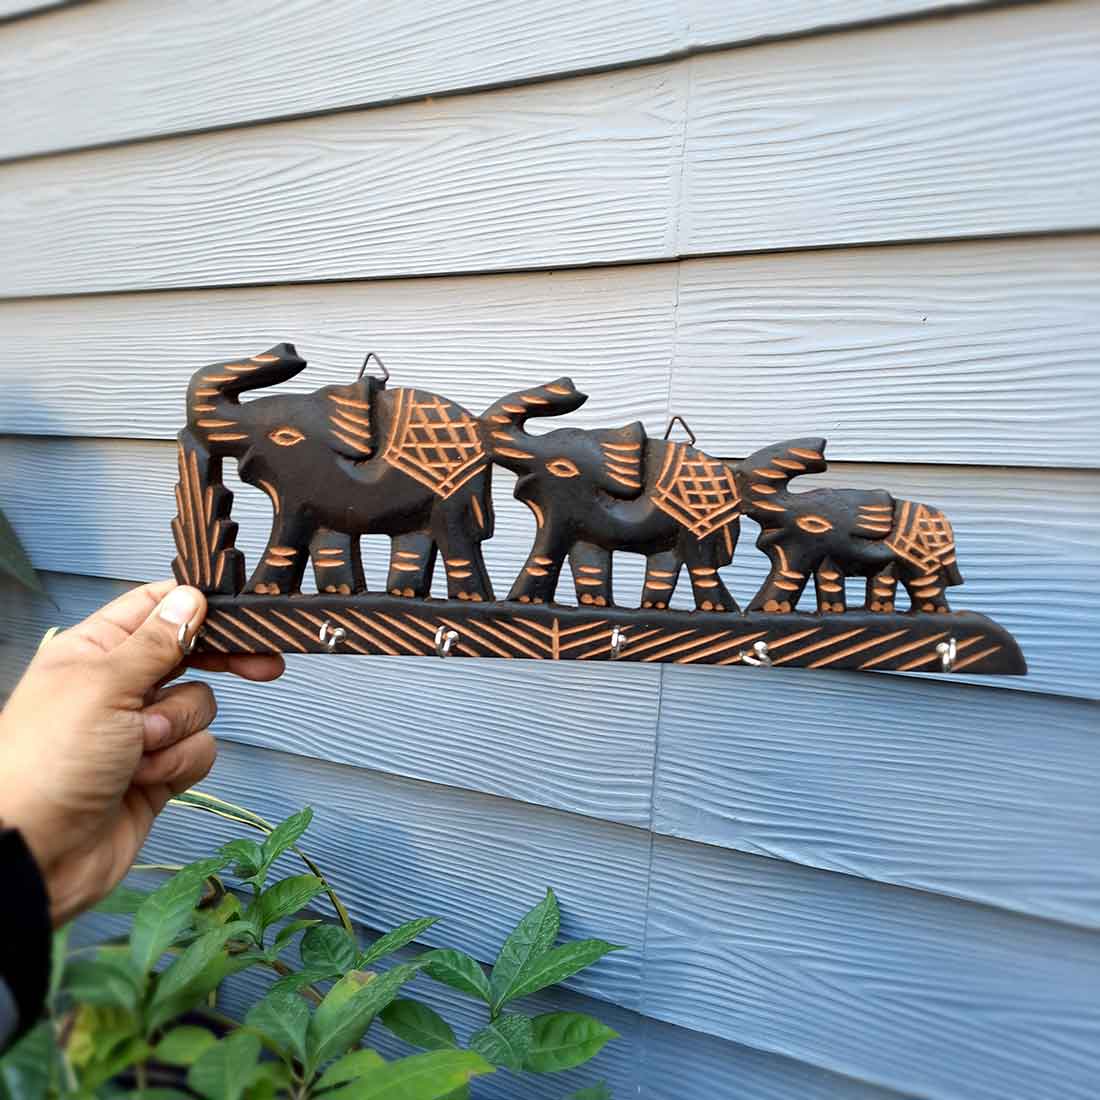 Key Holder Wall Hanging | Key Hook Stand - Elephant Design | Wooden Keys Organizer - For Home, Entrance, Office Decor & Gifts -14 Inch  (6 Hooks)